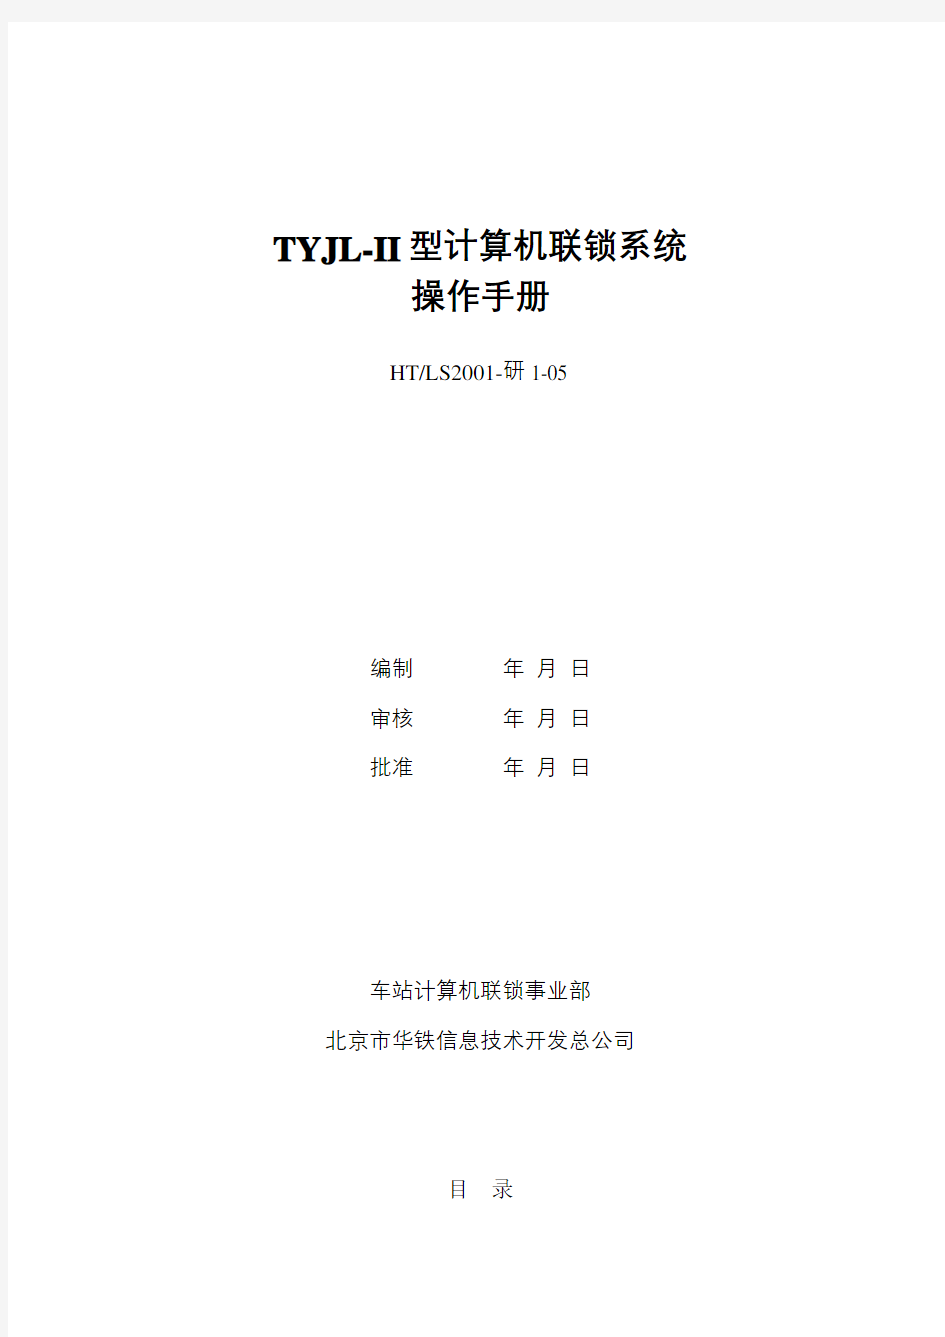 TYJL-II型计算机联锁系统操作手册